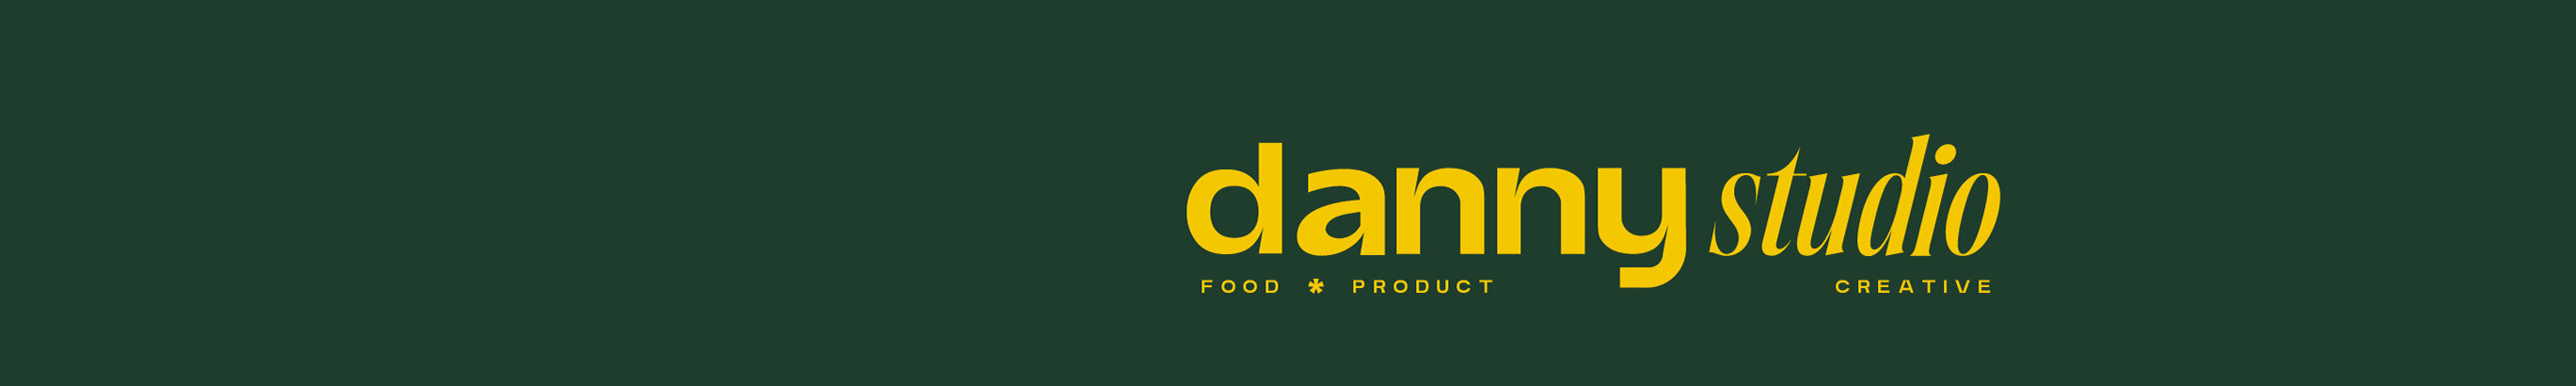 Danny Bui's profile banner